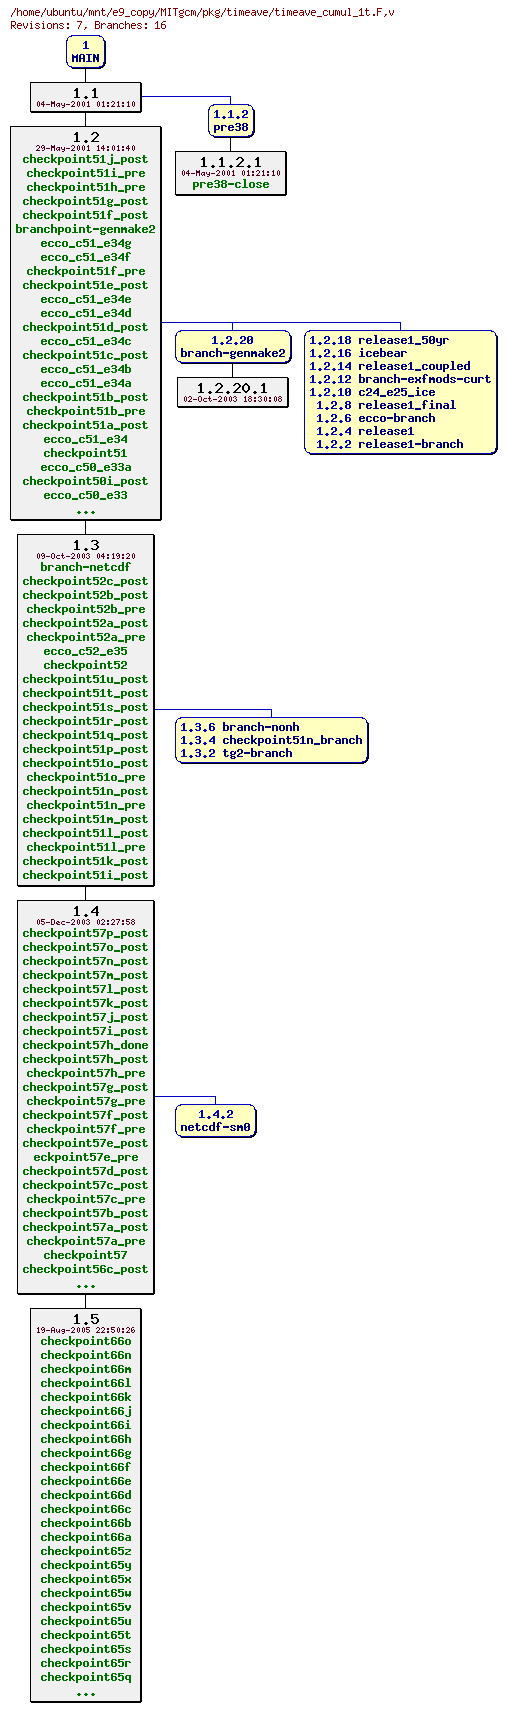 Revisions of MITgcm/pkg/timeave/timeave_cumul_1t.F